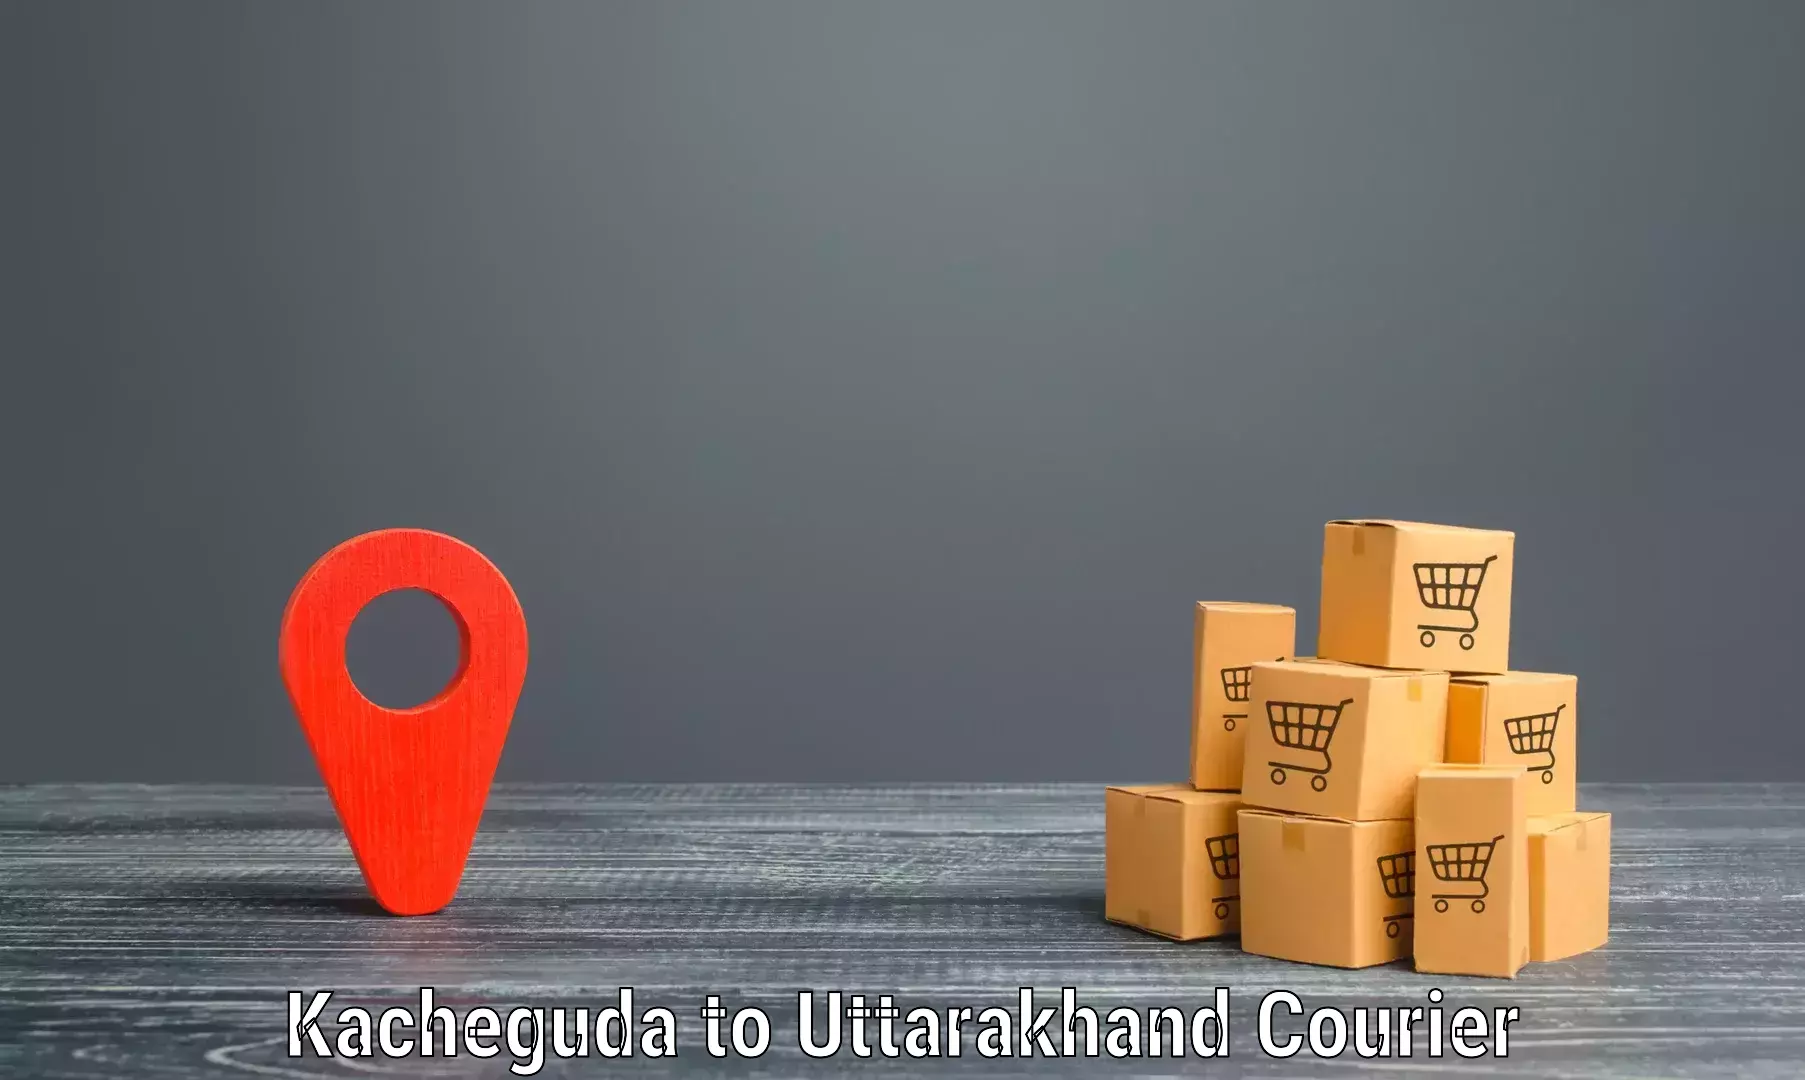 Urban courier service Kacheguda to Rishikesh